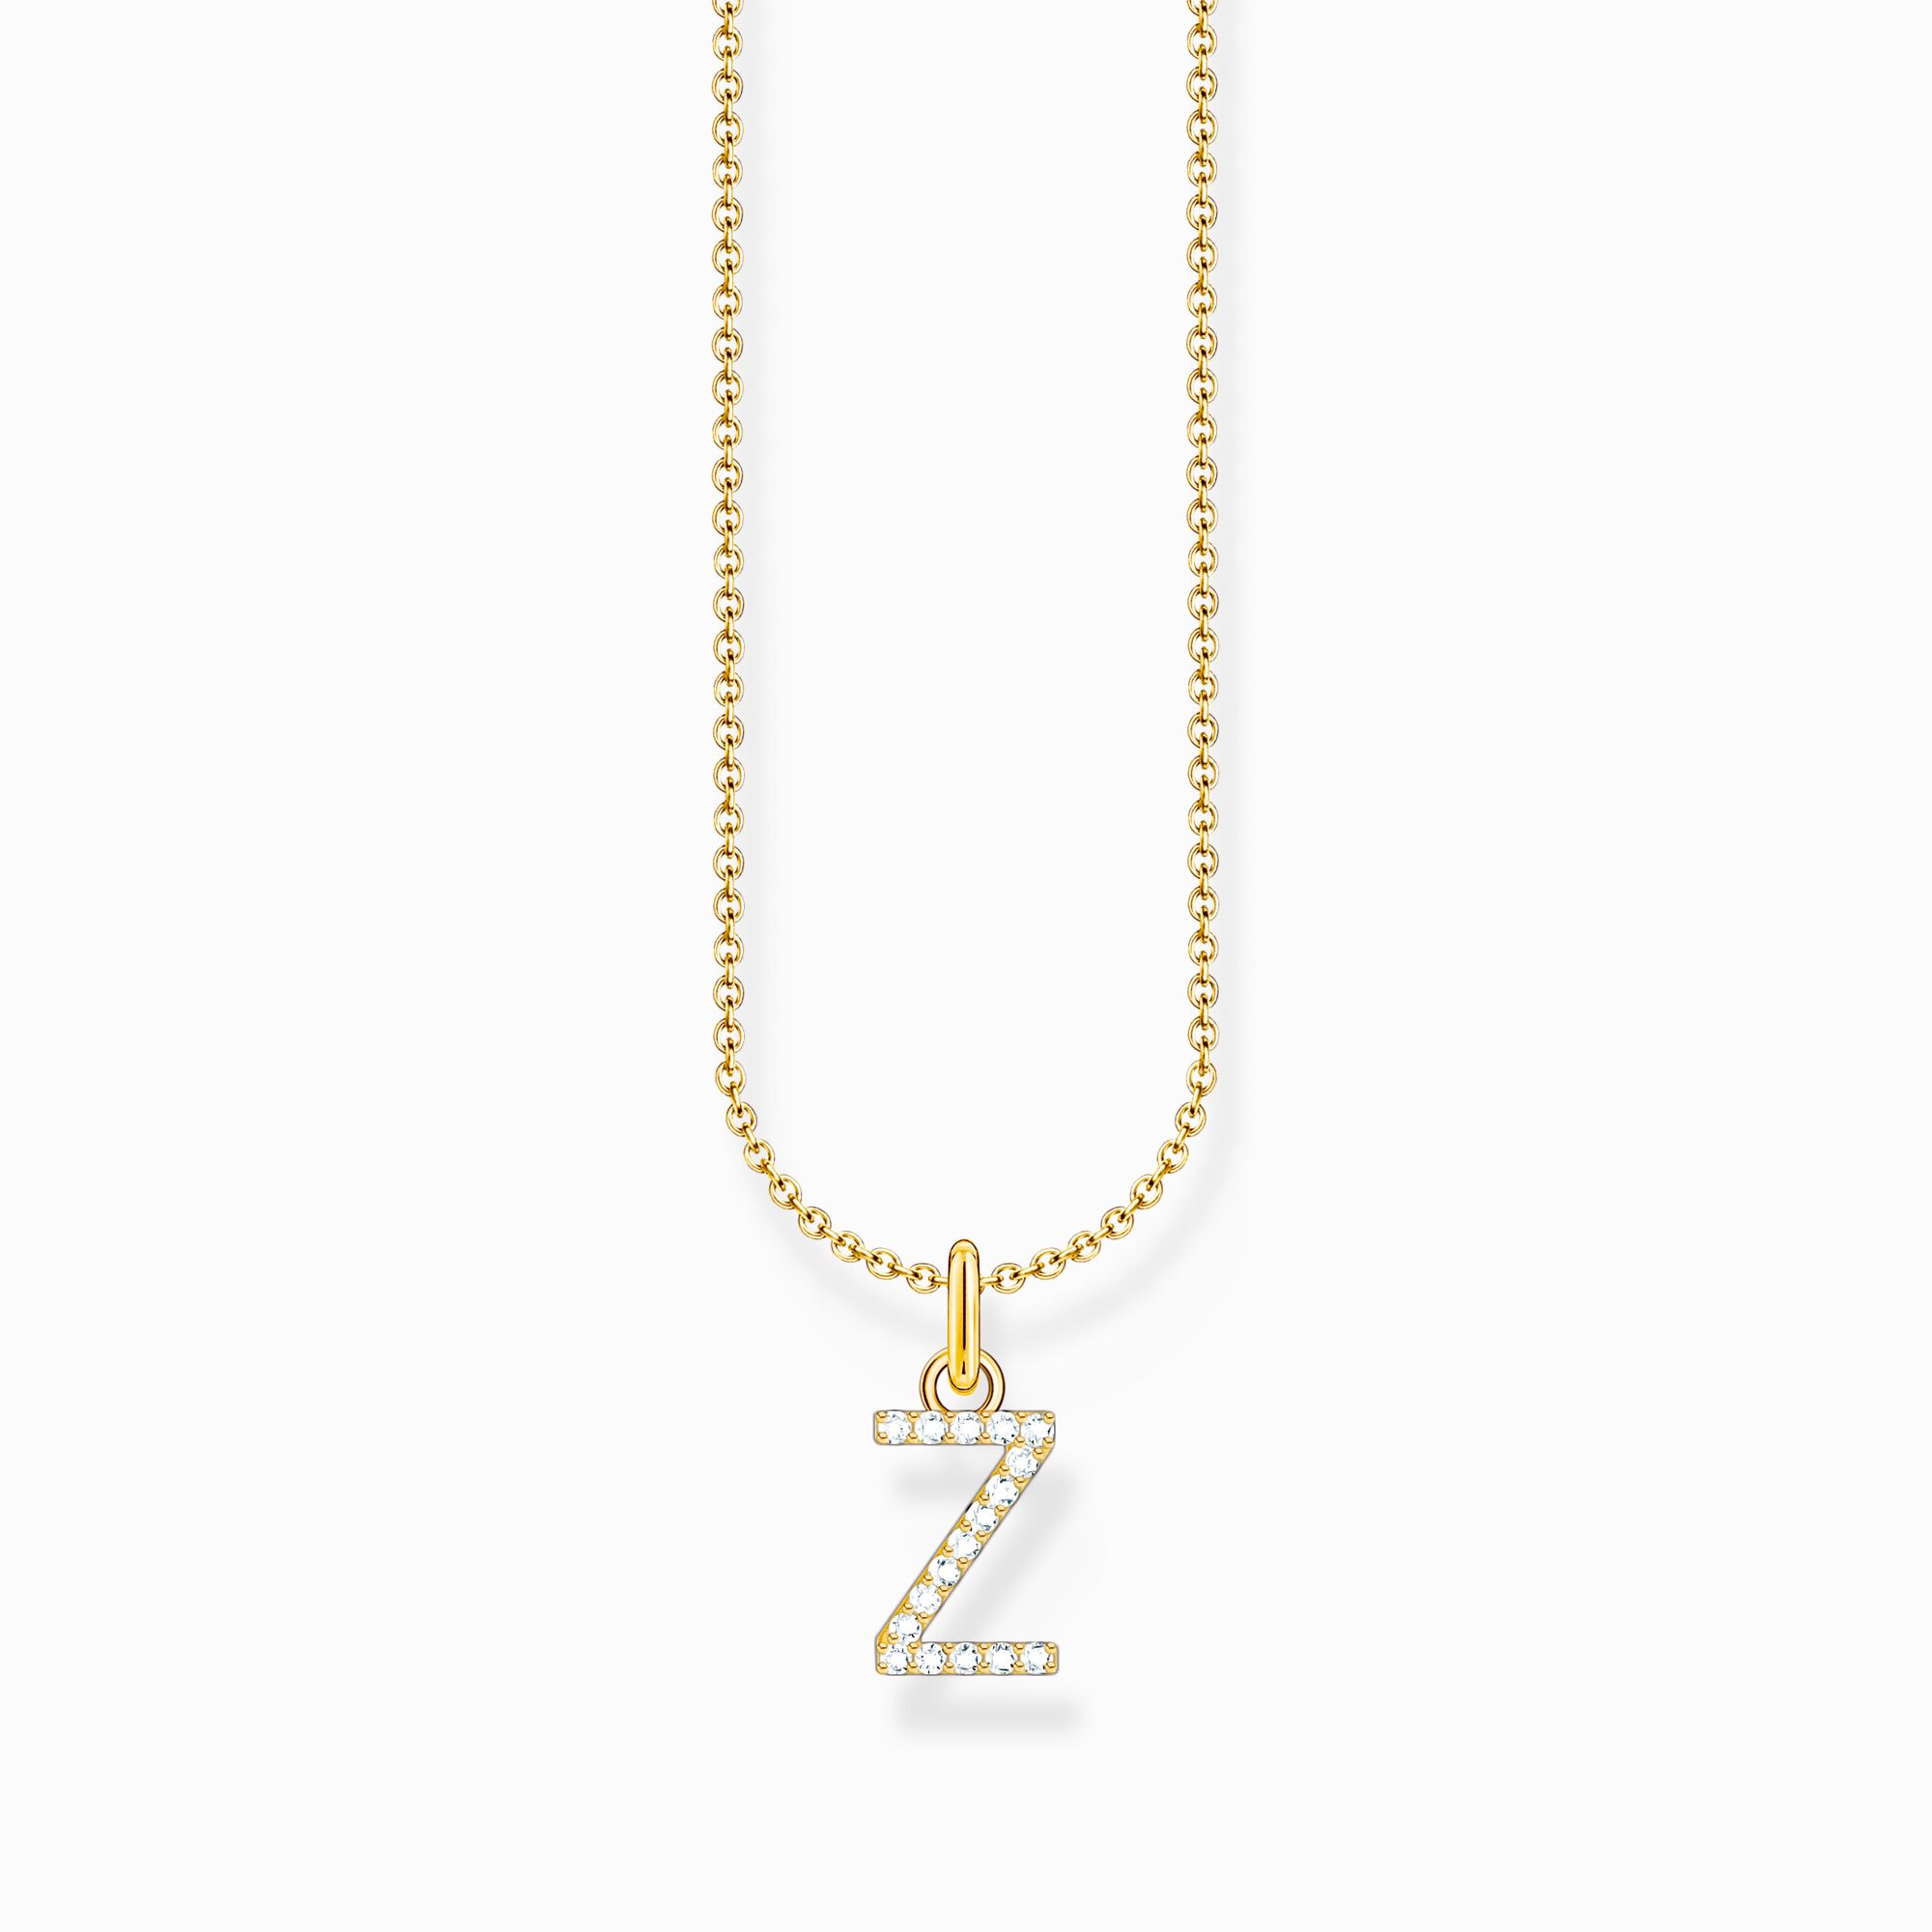 Halsband med bokstaven Z, guldpl&auml;terat ur kollektionen Charming Collection i THOMAS SABO:s onlineshop